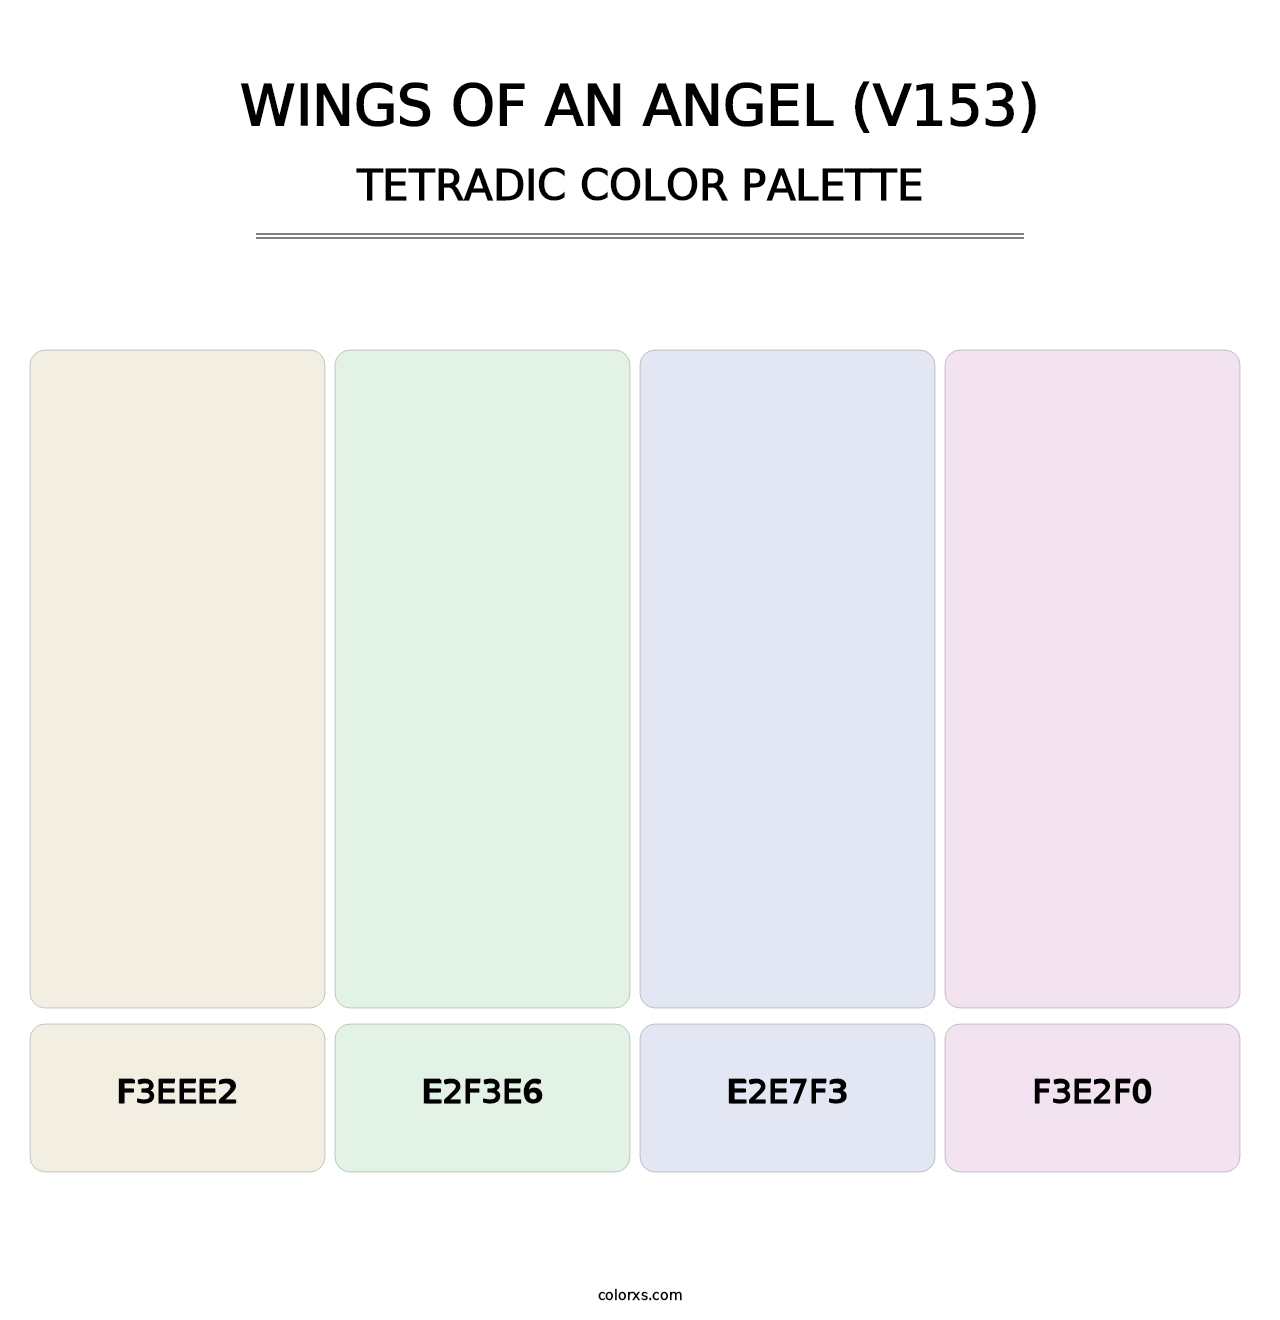 Wings of an Angel (V153) - Tetradic Color Palette